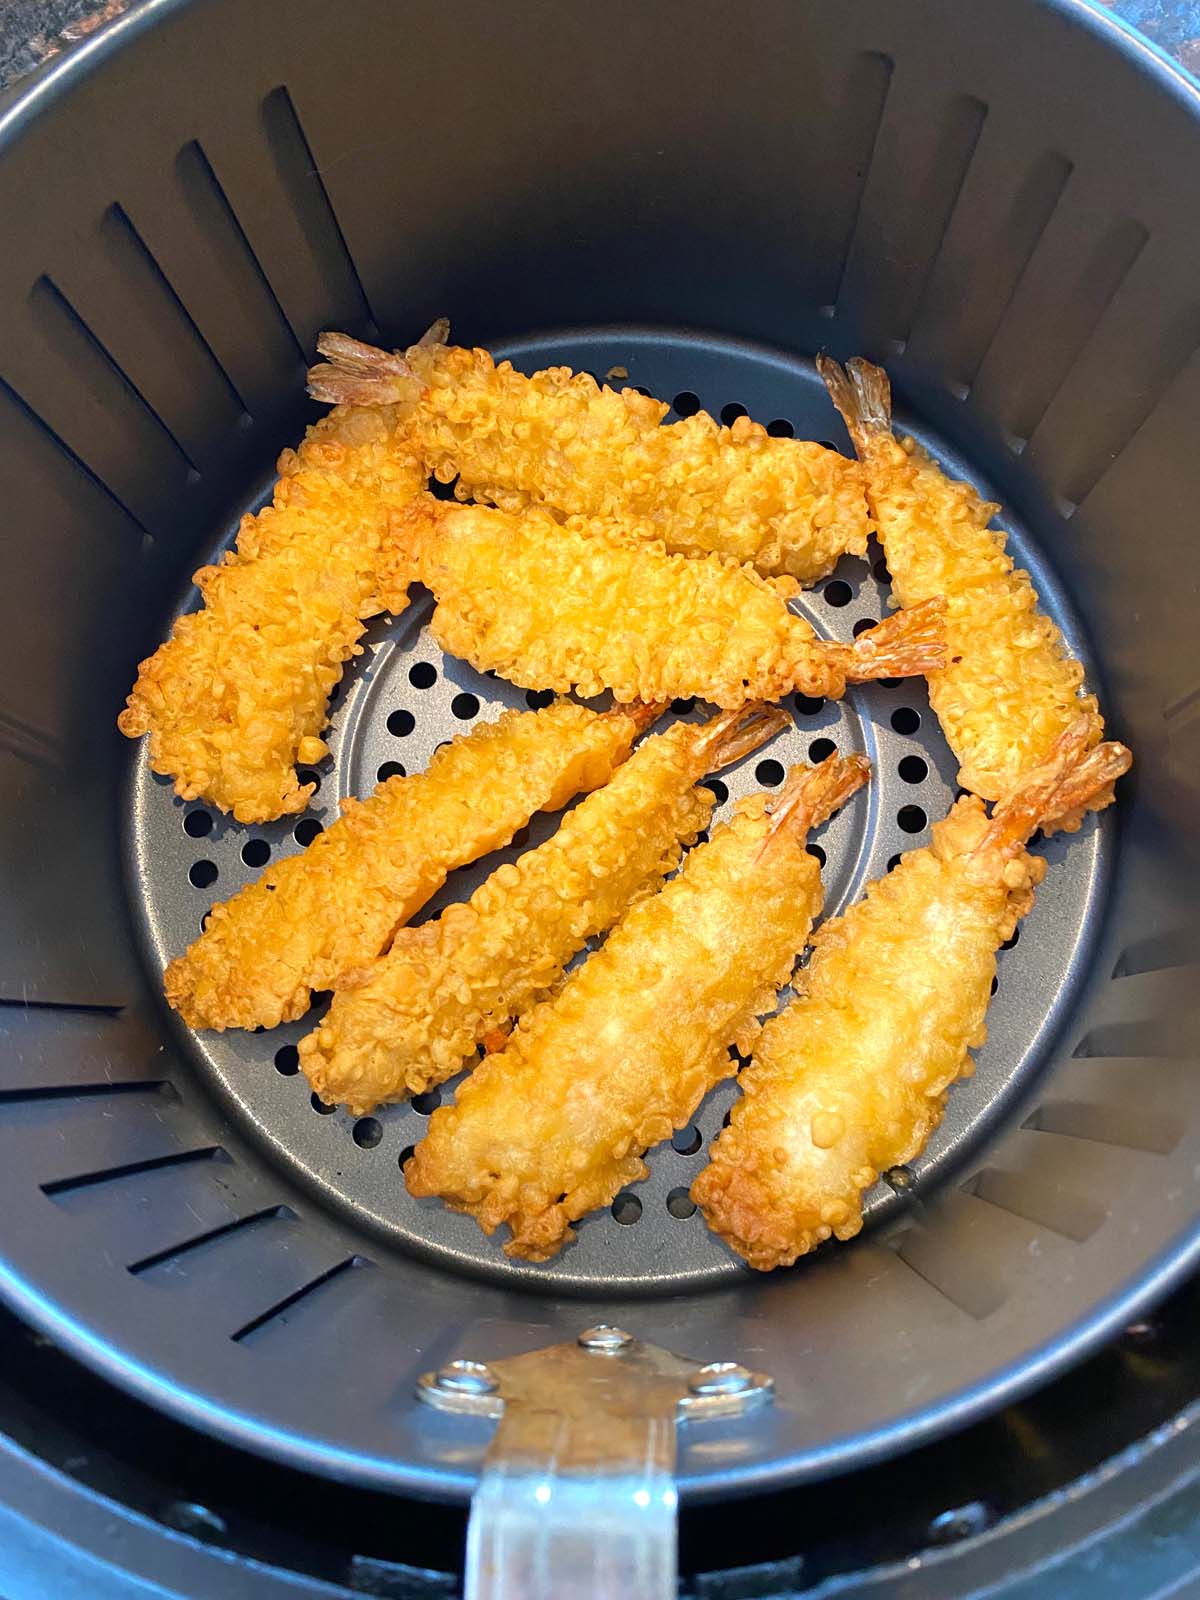 Crispy tempura shrimp cooked in an air fryer basket.